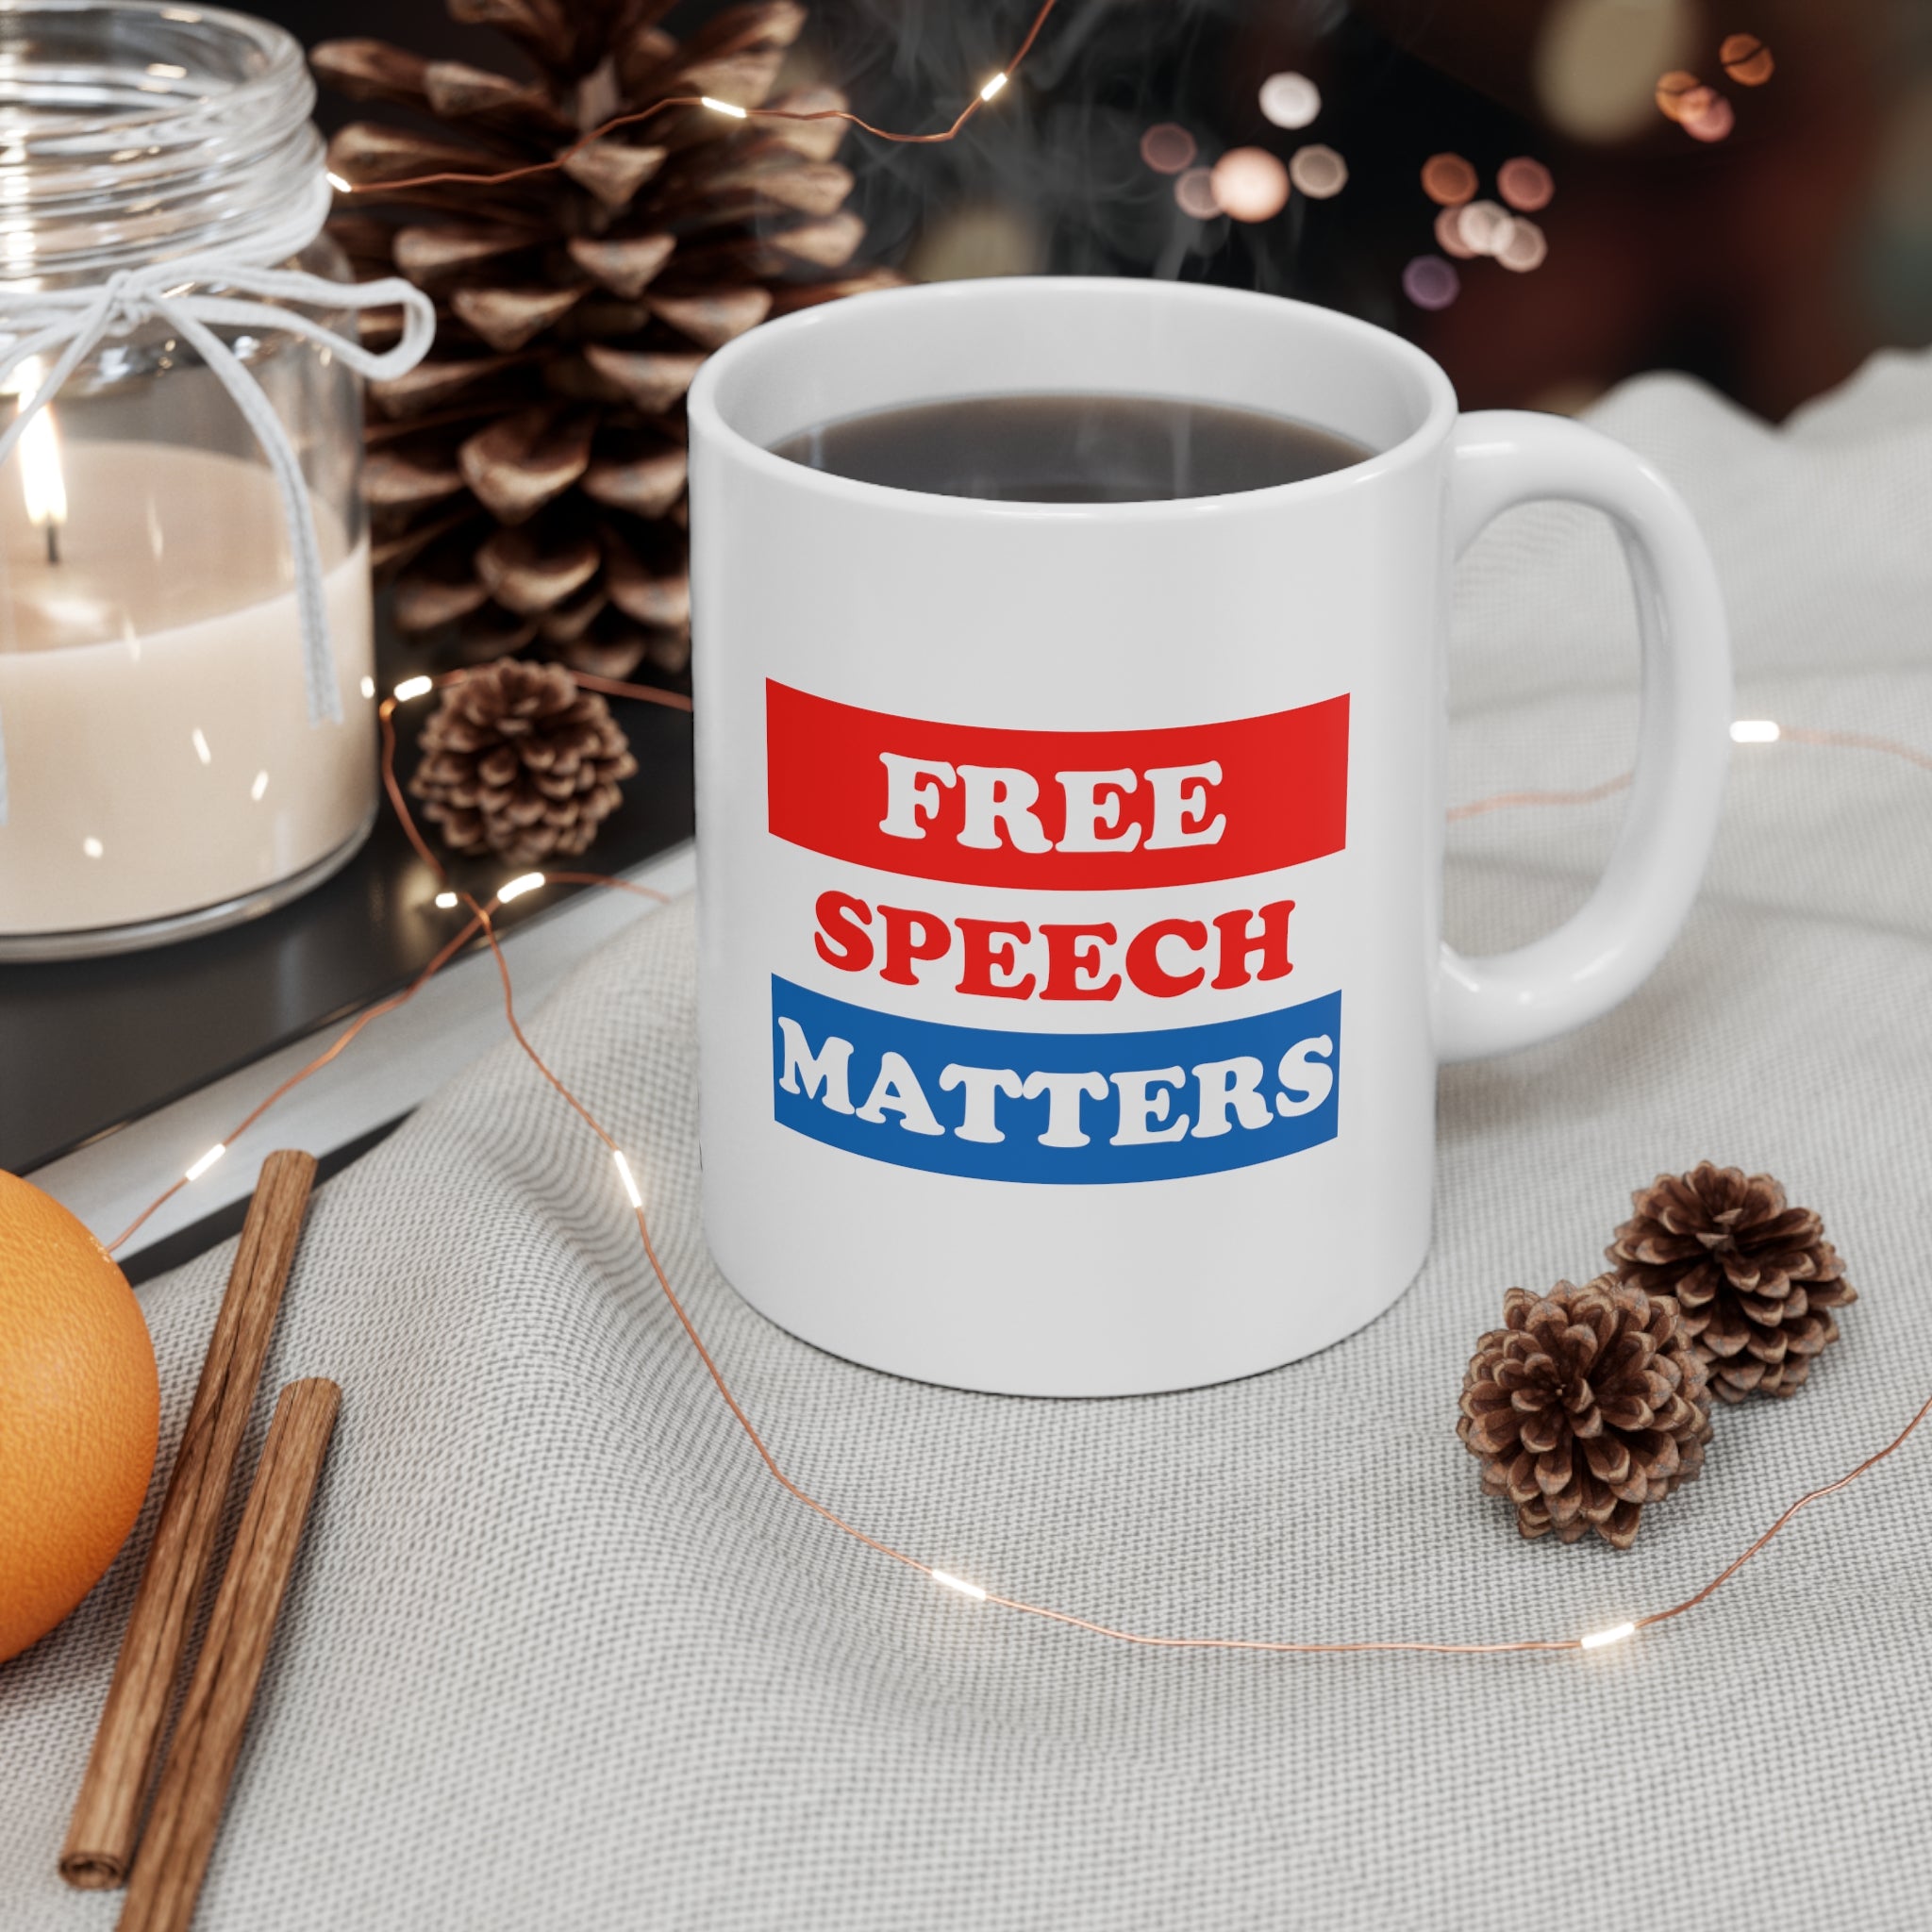 Free Speech Matters - Ceramic Mug 11oz